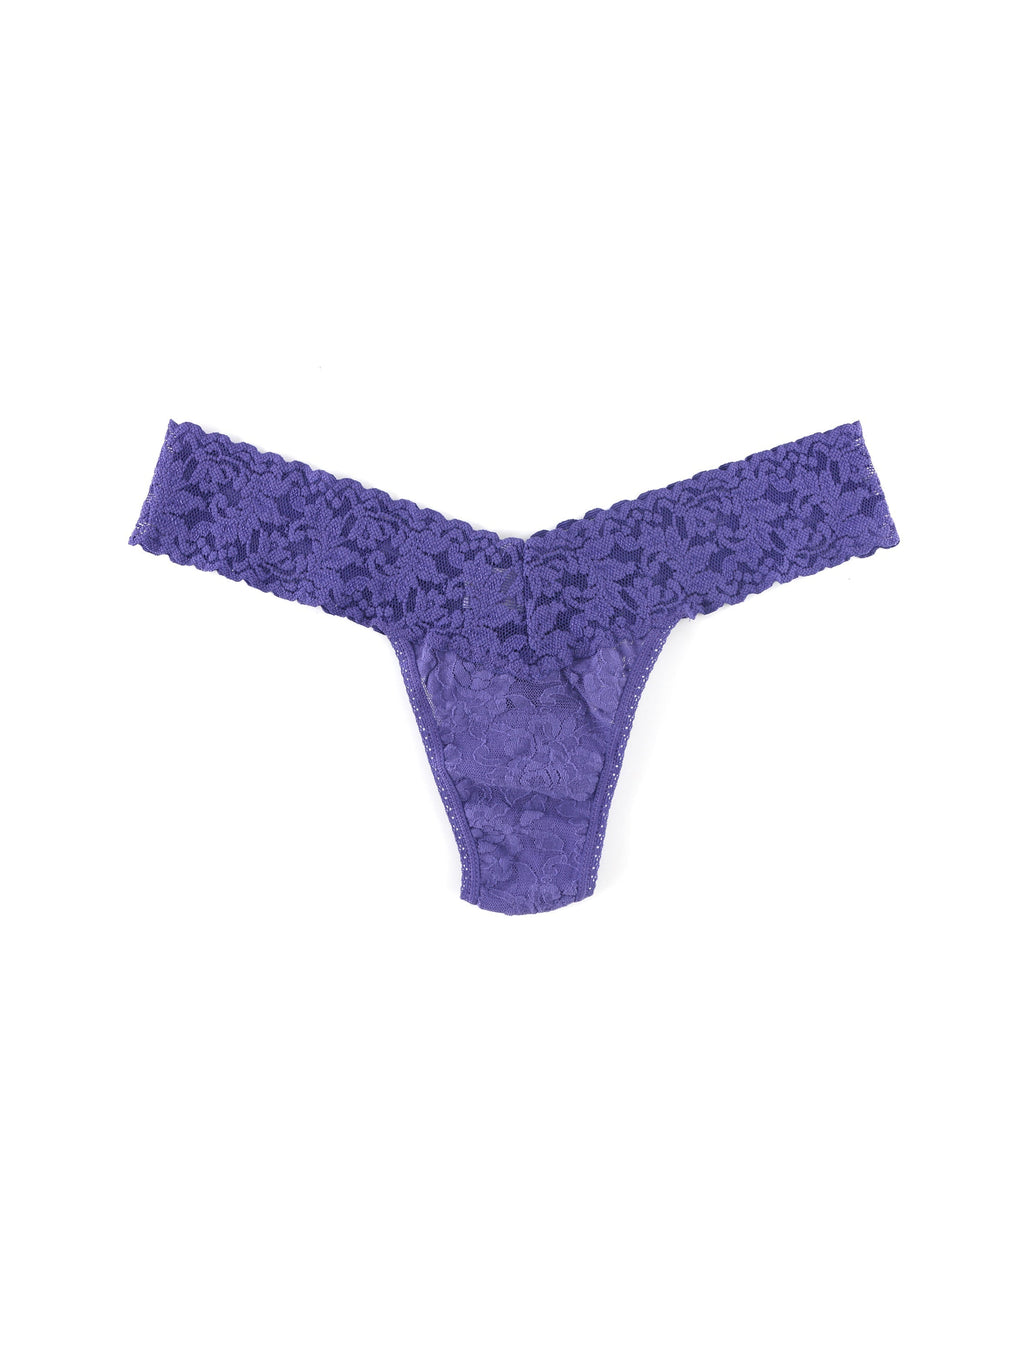 JENNI Flower Lace Thong Underwear Plus Size One Size Lavender Purple Panty